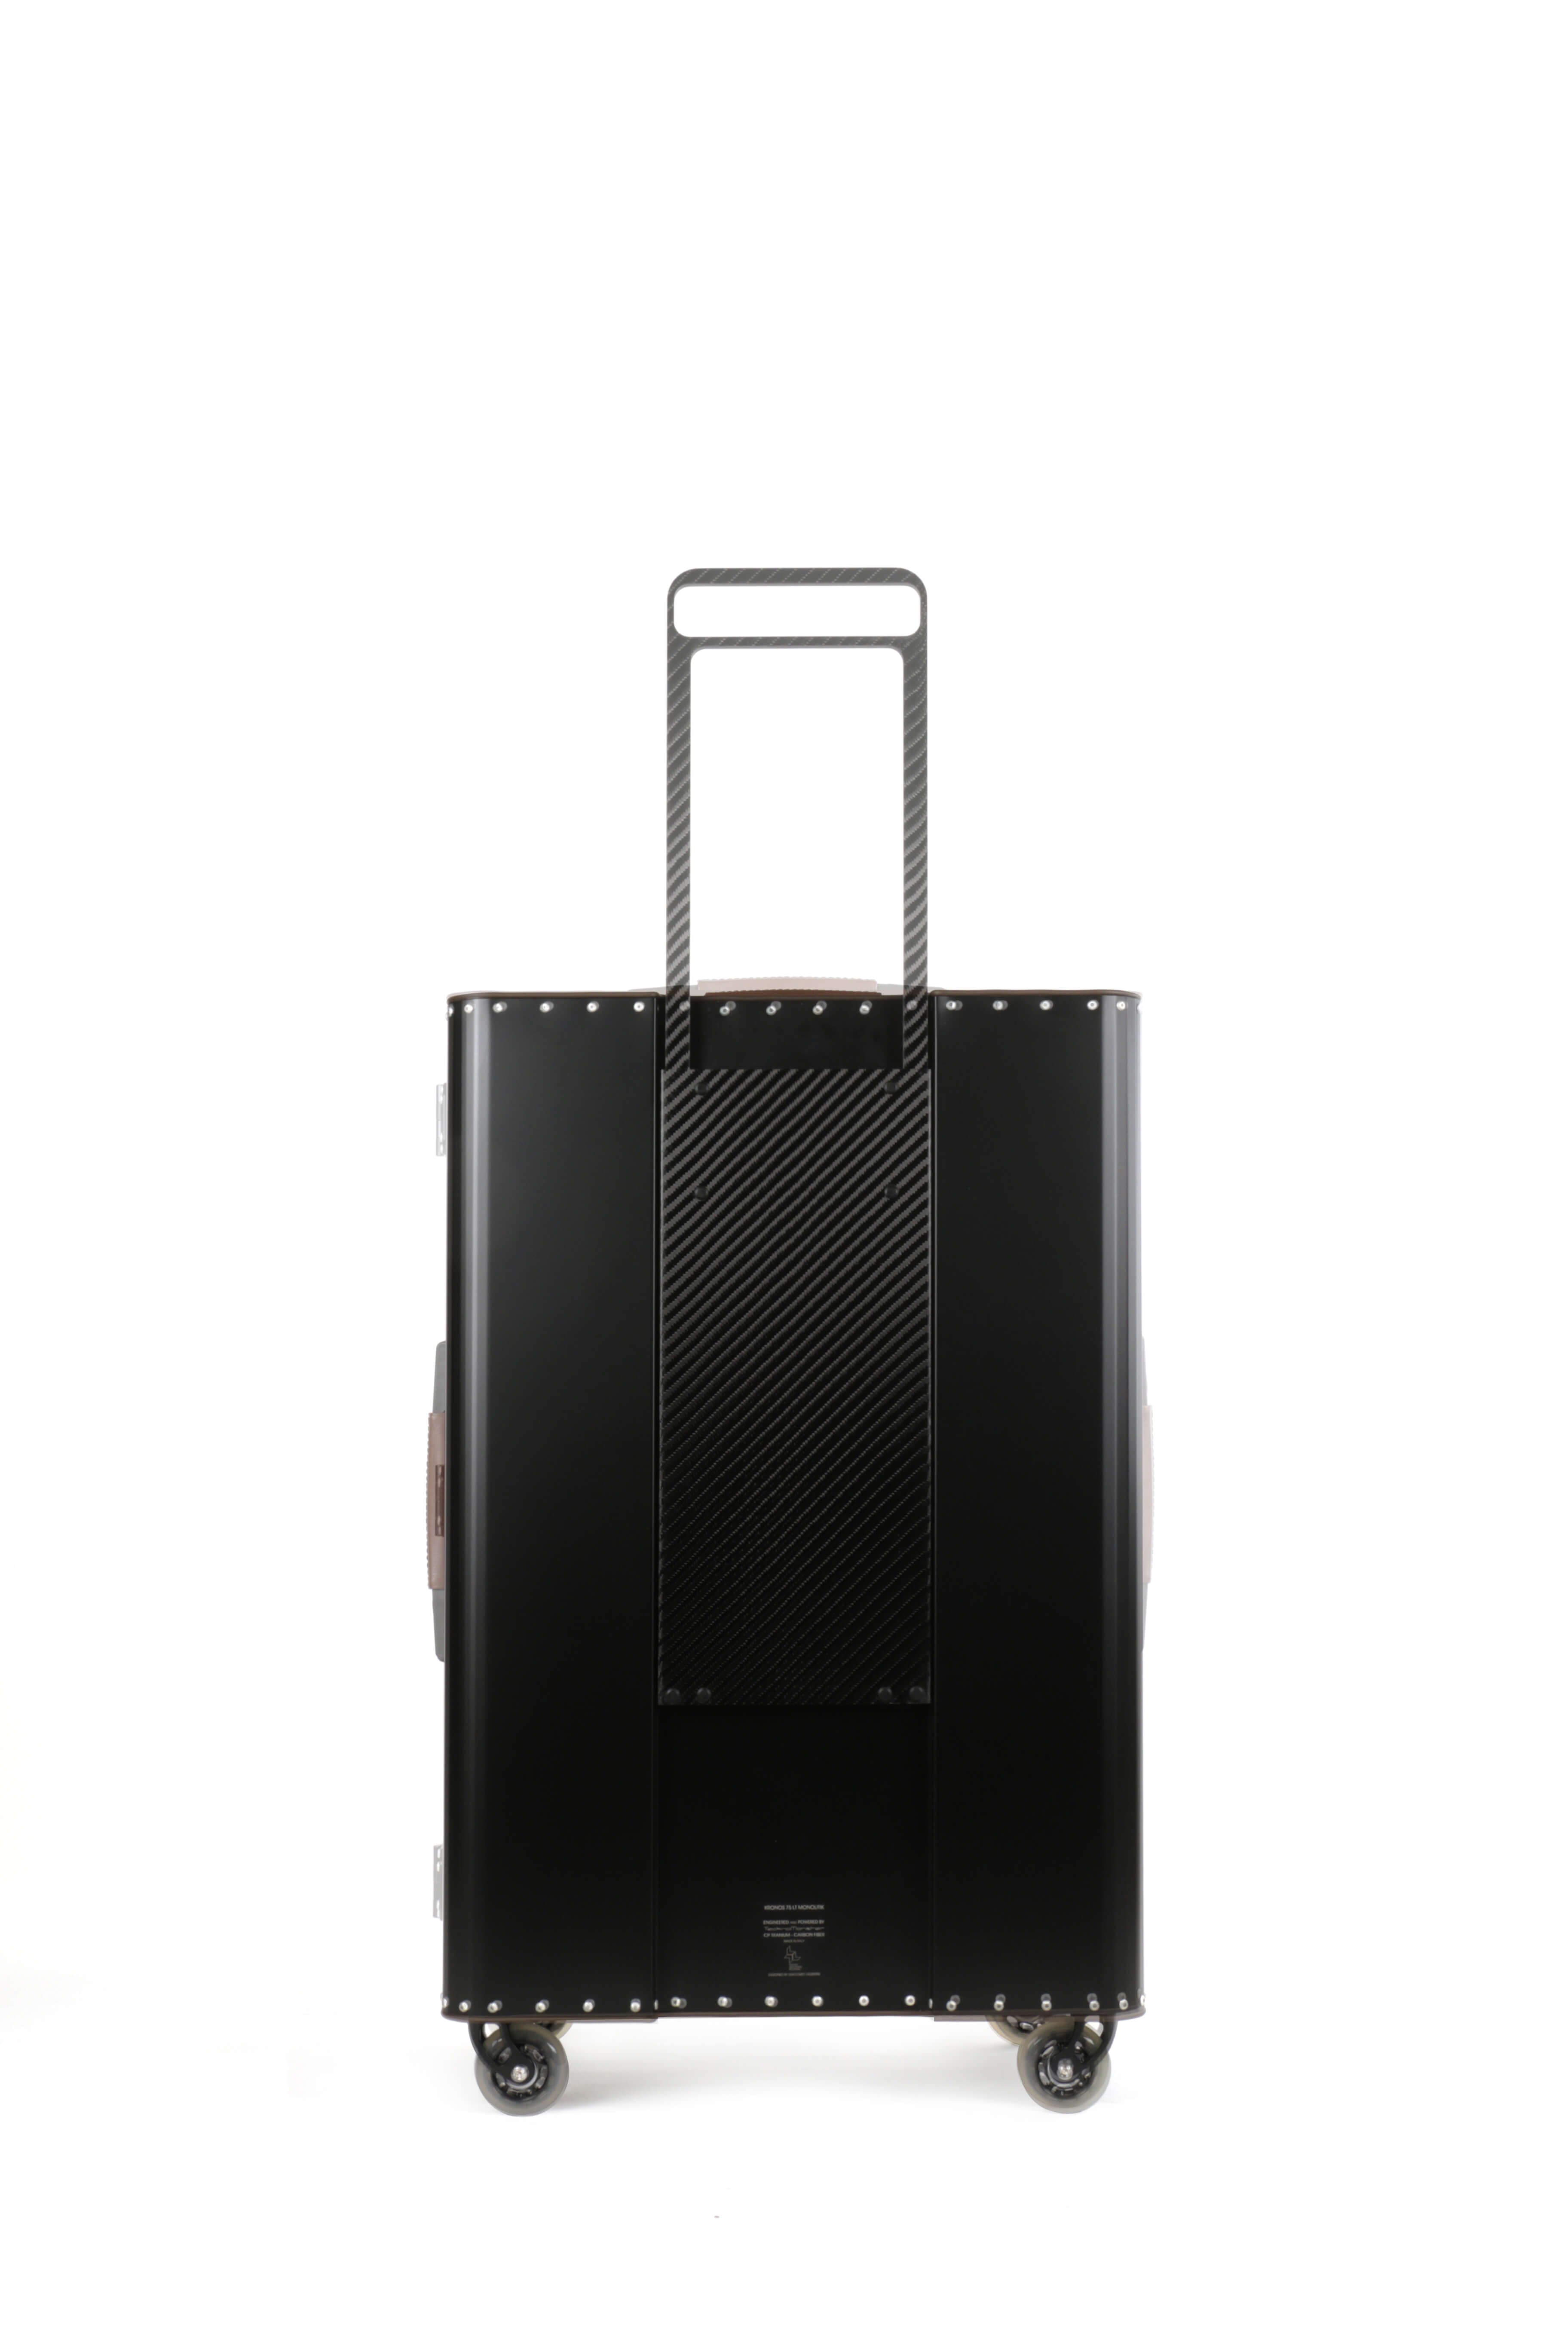 Kronos Black Titanium Check-In Luggage, Chestnut